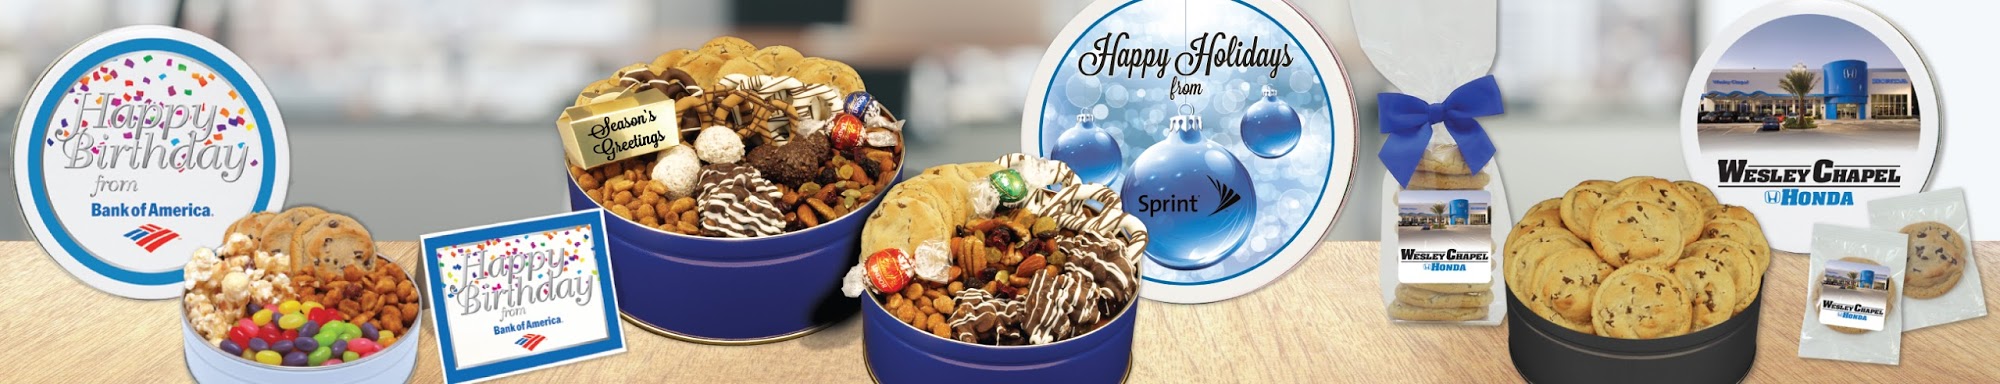 Tincredible Treats Cookies & Gourmet Gifts